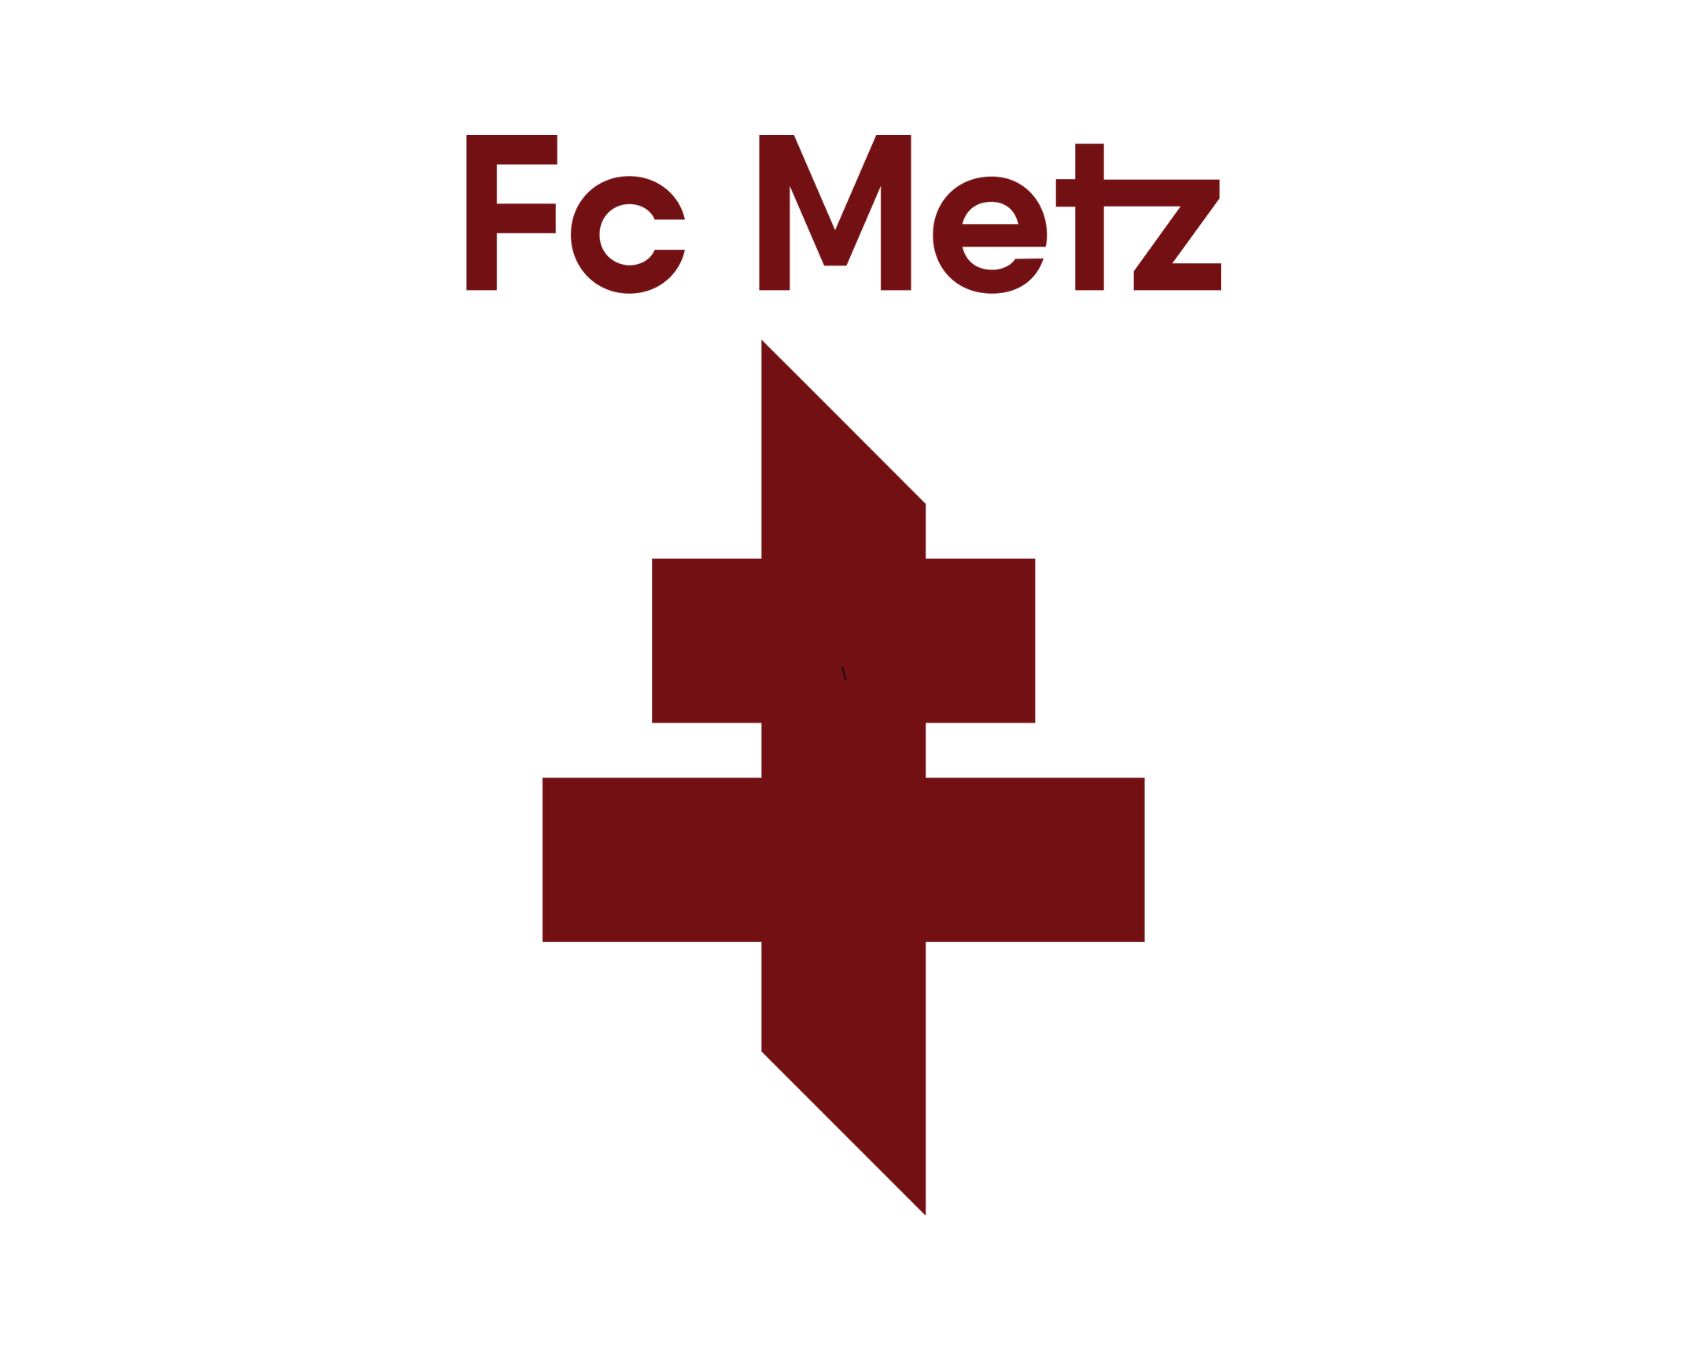 fc-metz-23-football-club-facts